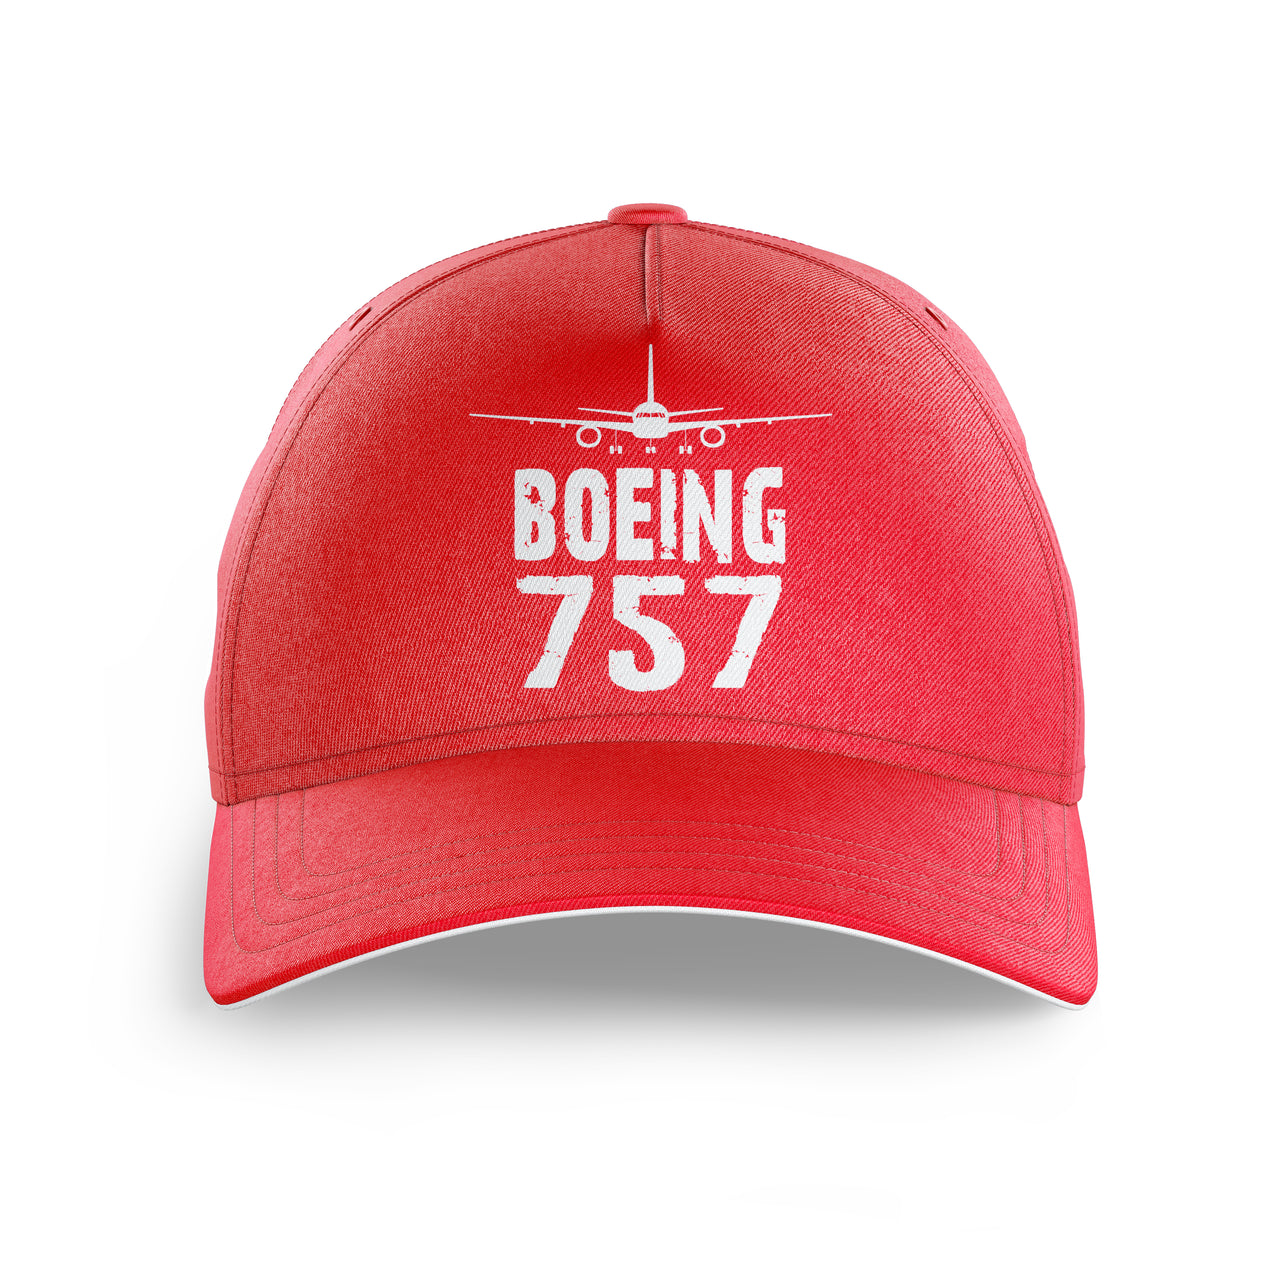 Boeing 757 & Plane Printed Hats